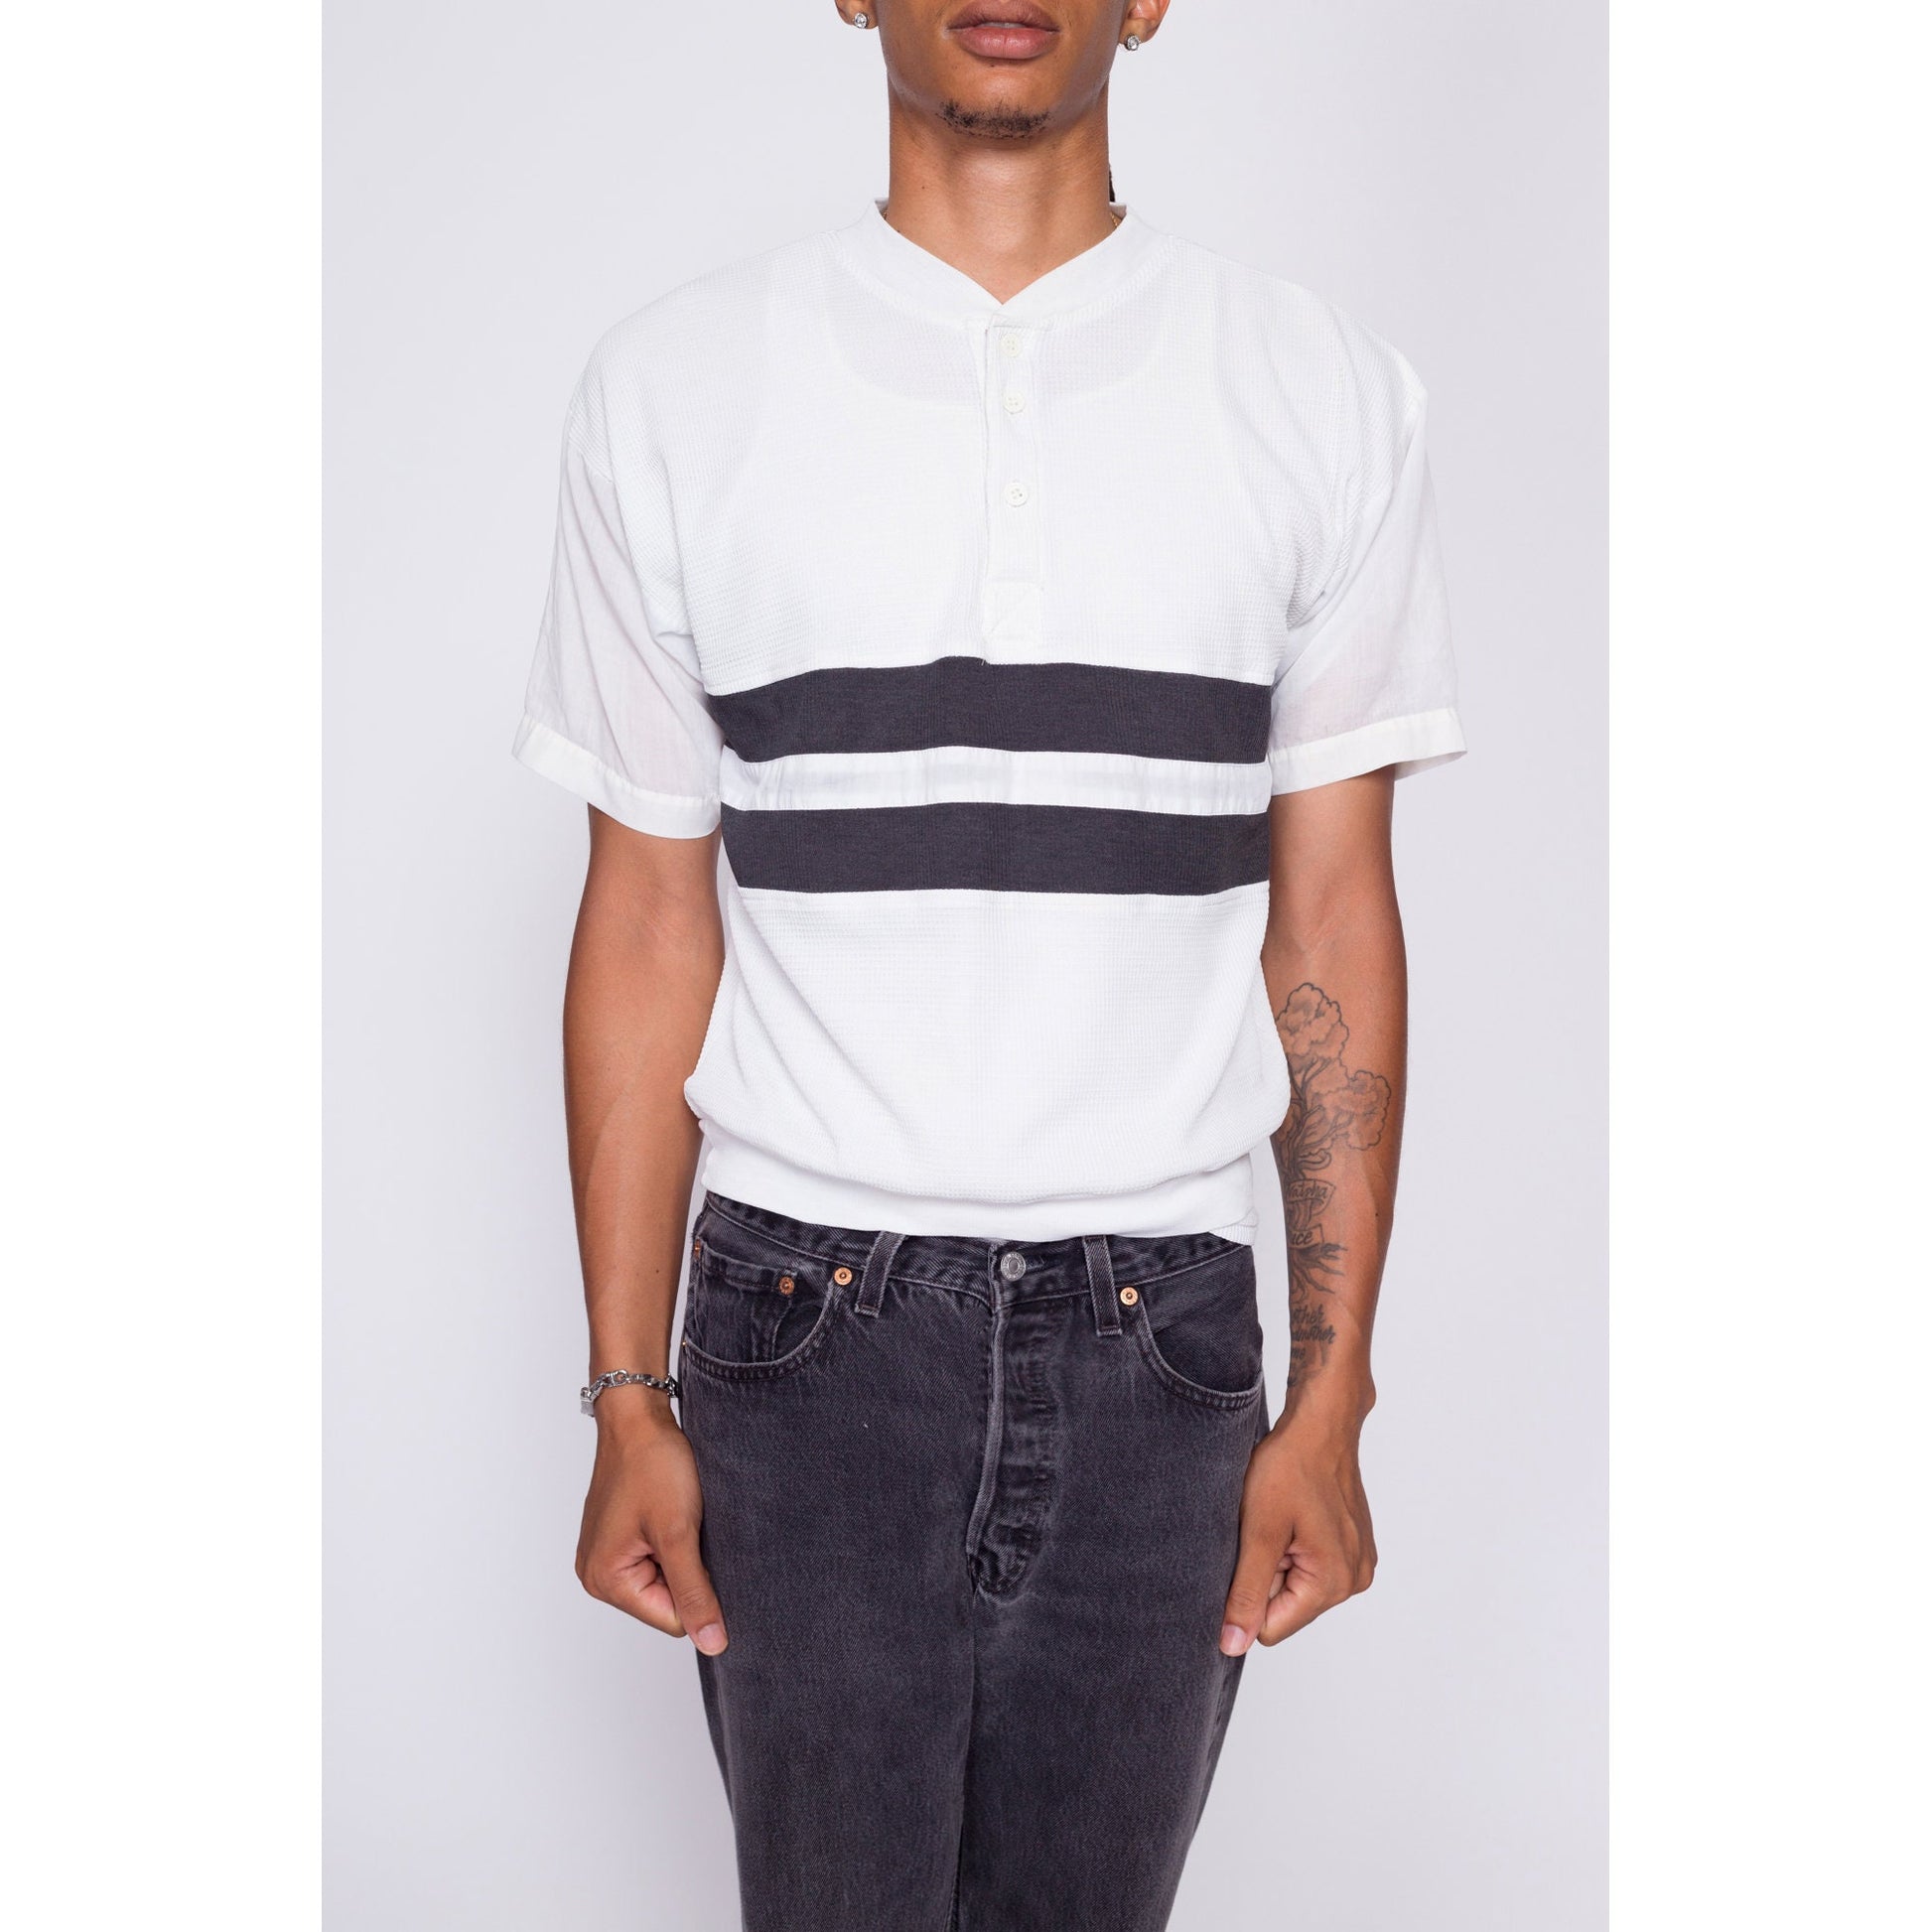 80s White & Black Striped Henley Shirt - Men's Medium to Large | Vintage Lightweight Waffle Knit Sportswear Top